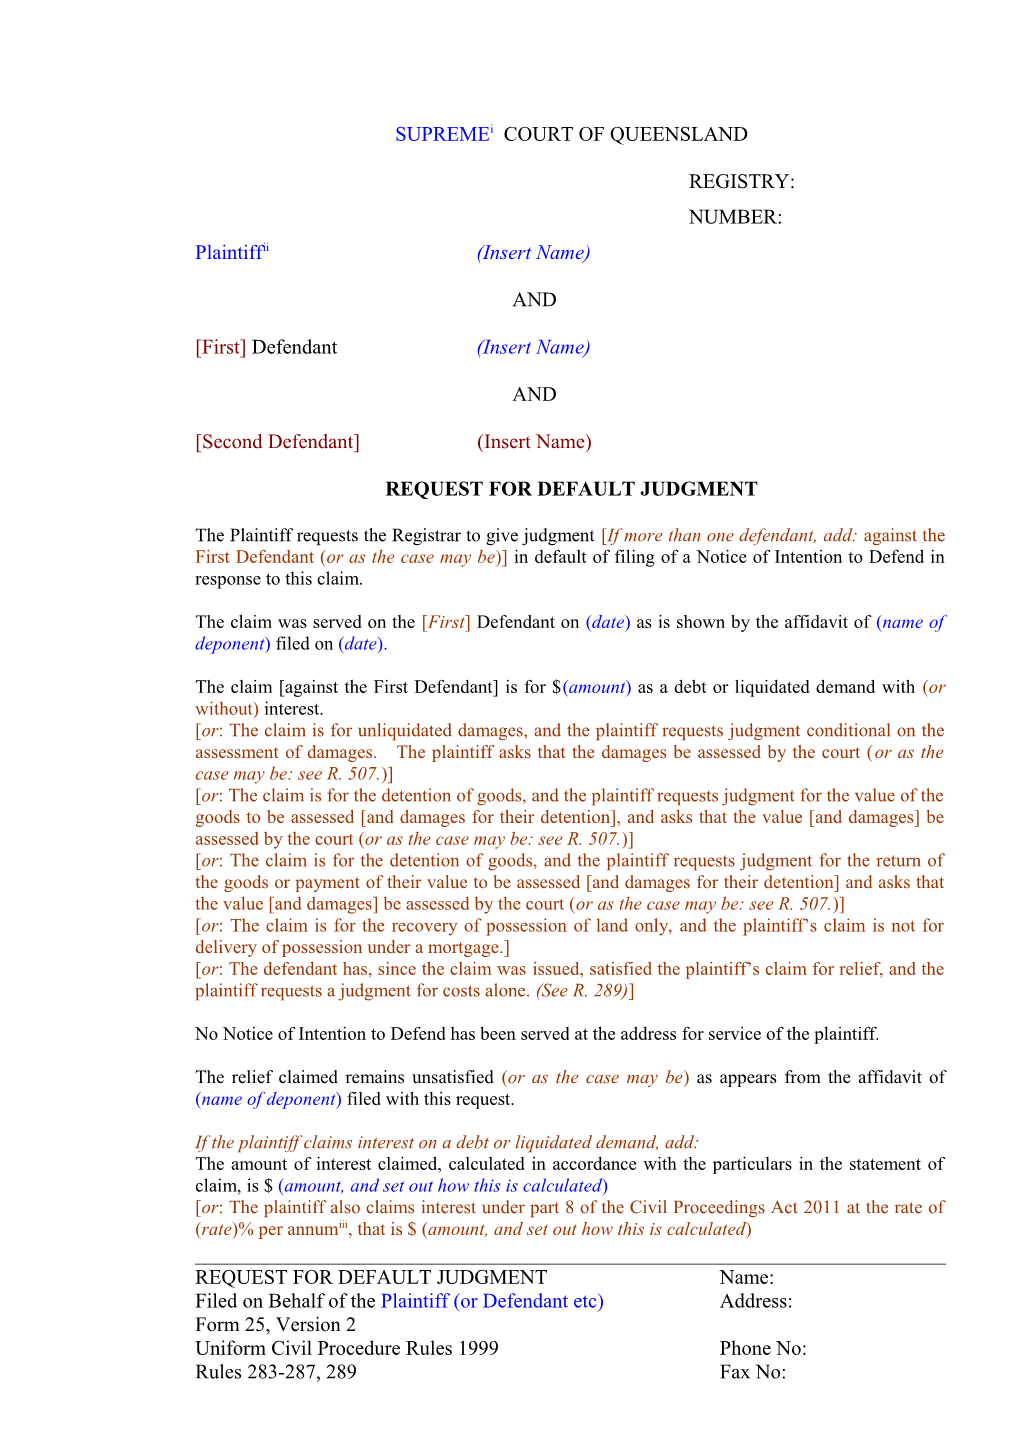 Uniform Civil Procedure Rules - Form 25